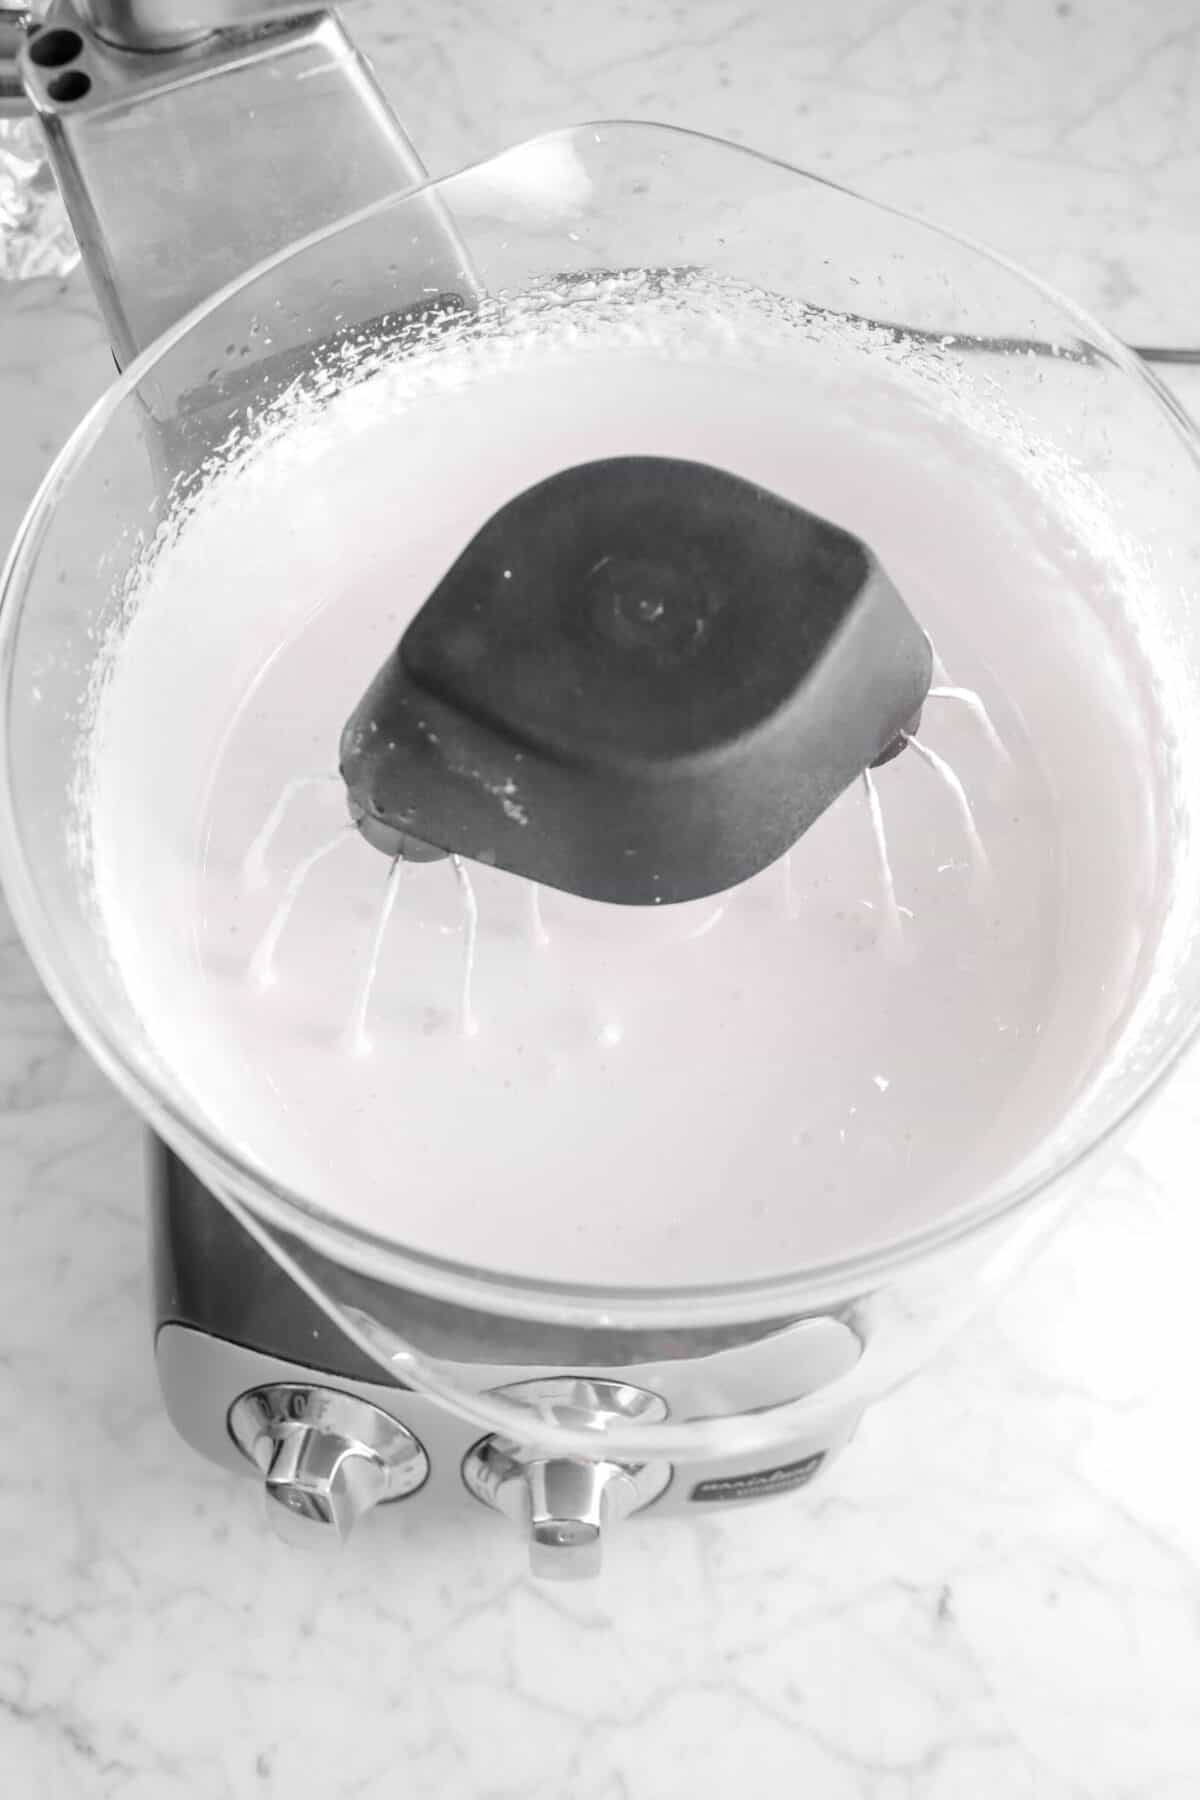 marshmallow mixture in a mixer